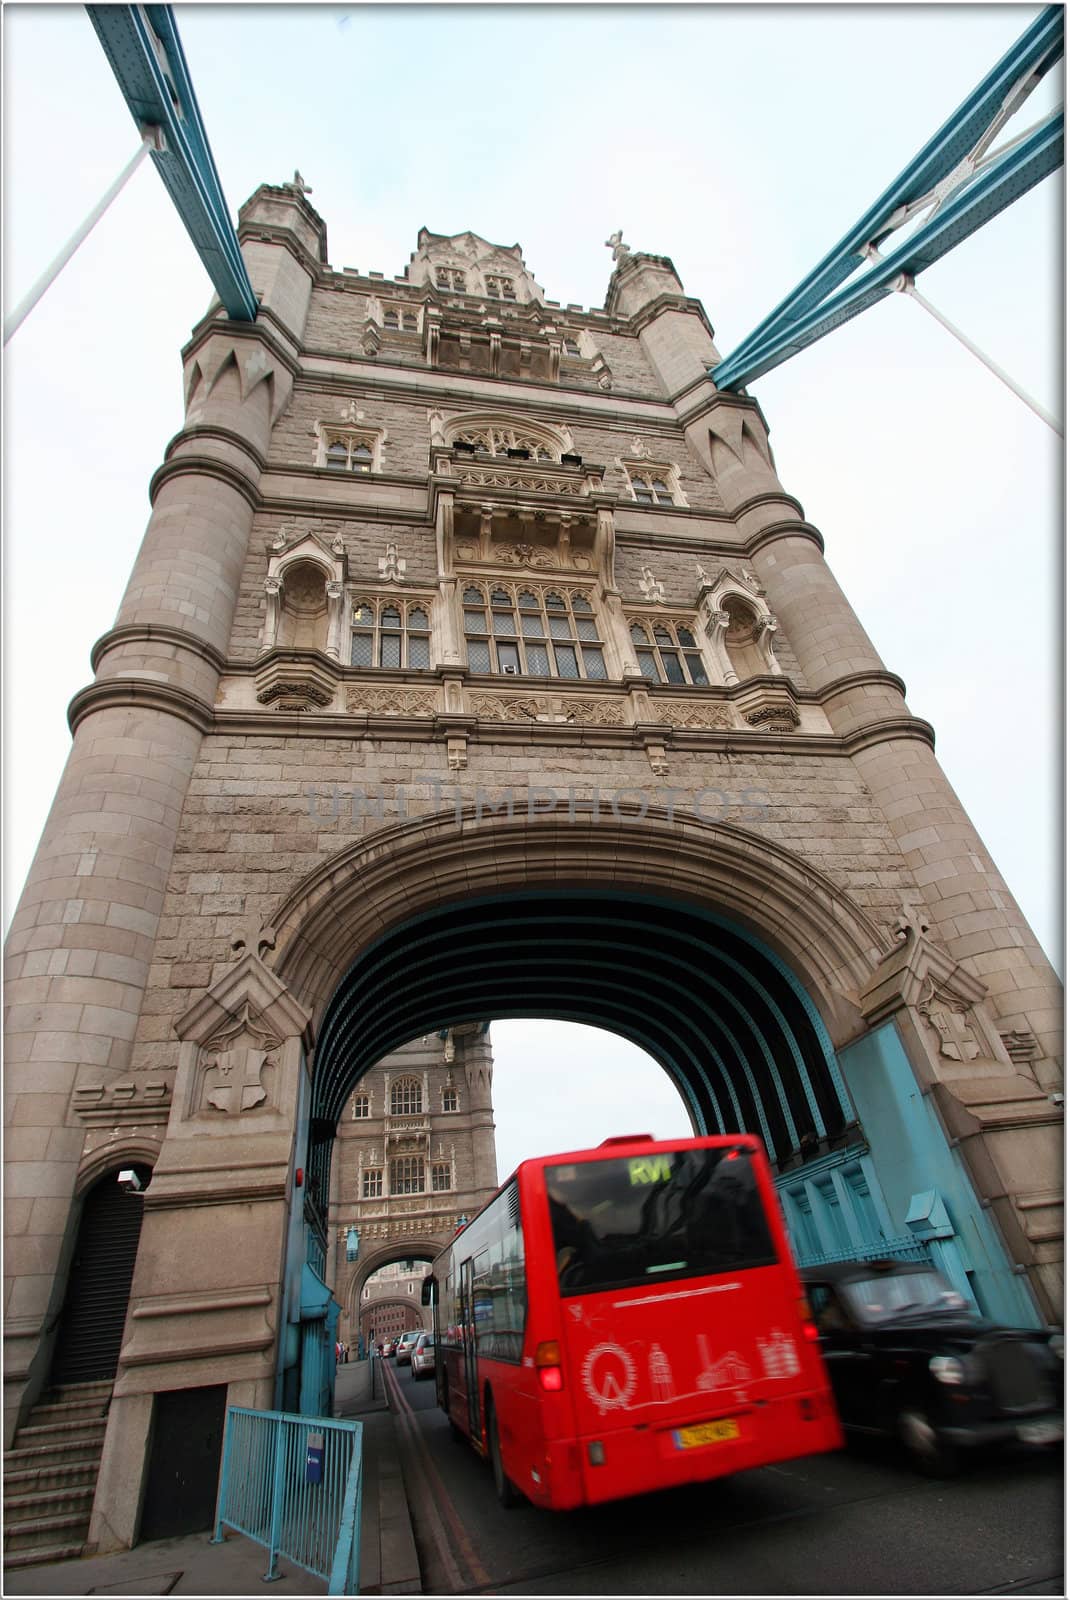 London Tower Bridge by Imagecom